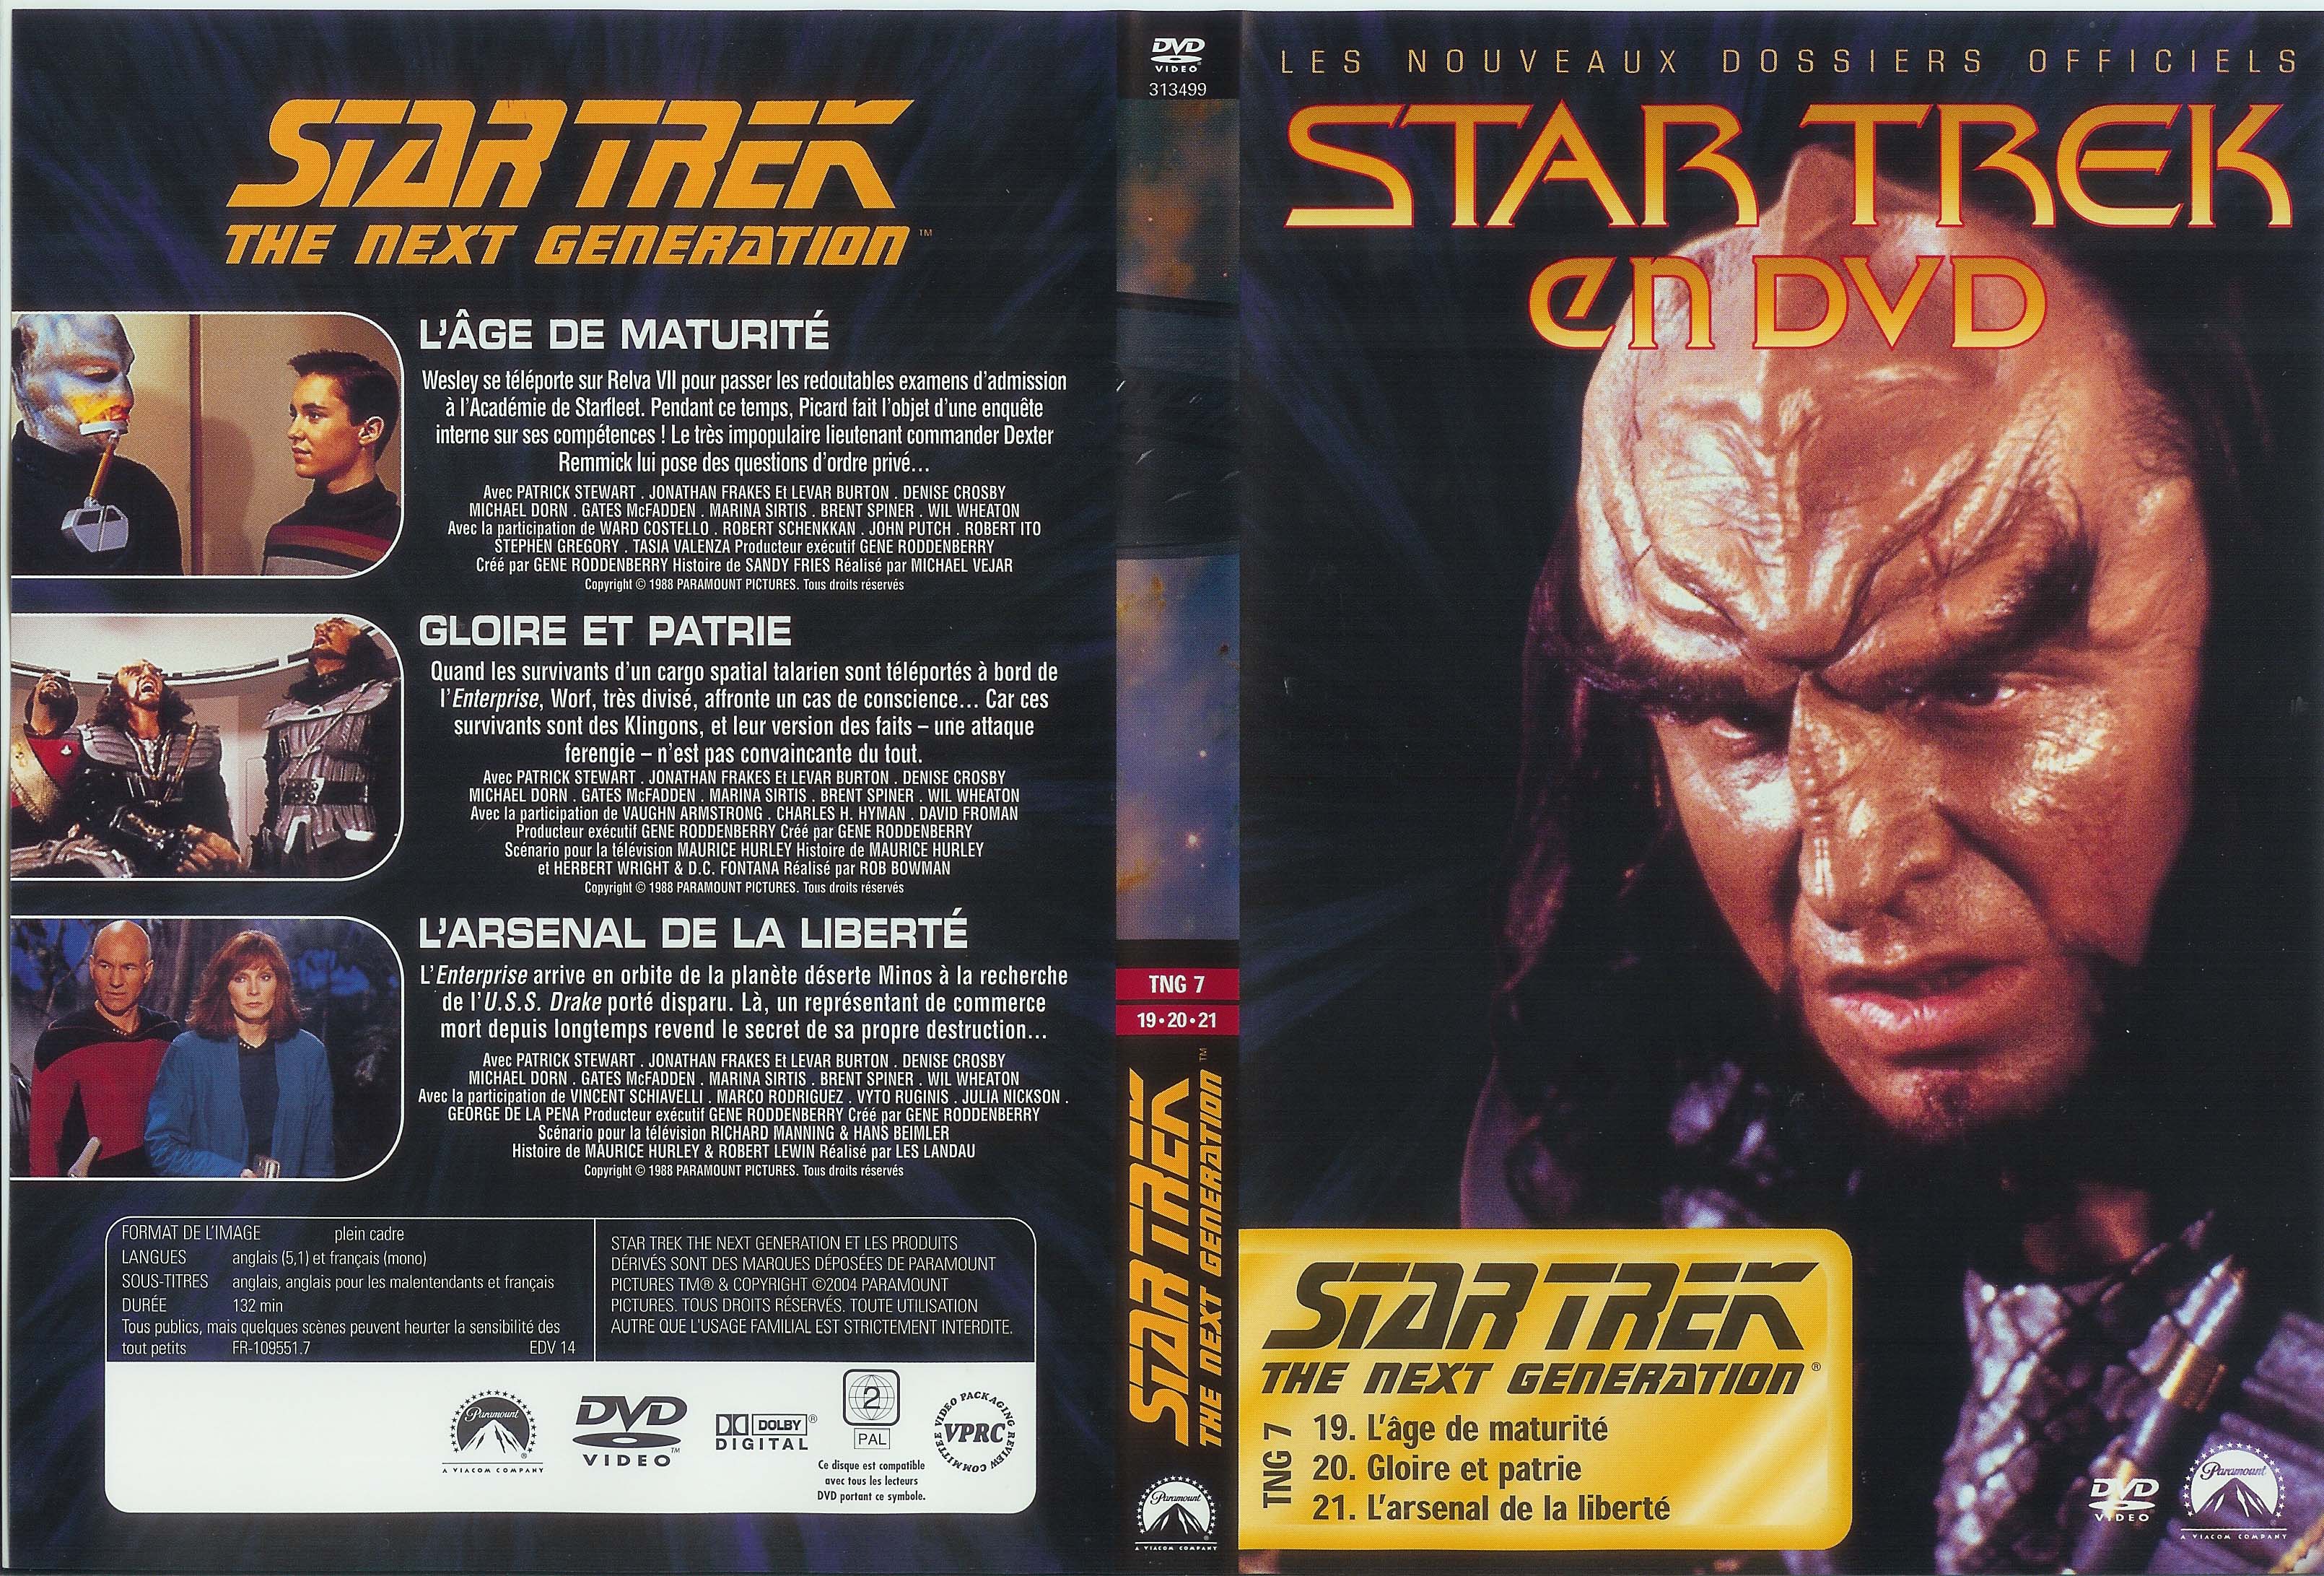 Jaquette DVD Star trek The next generation vol 07